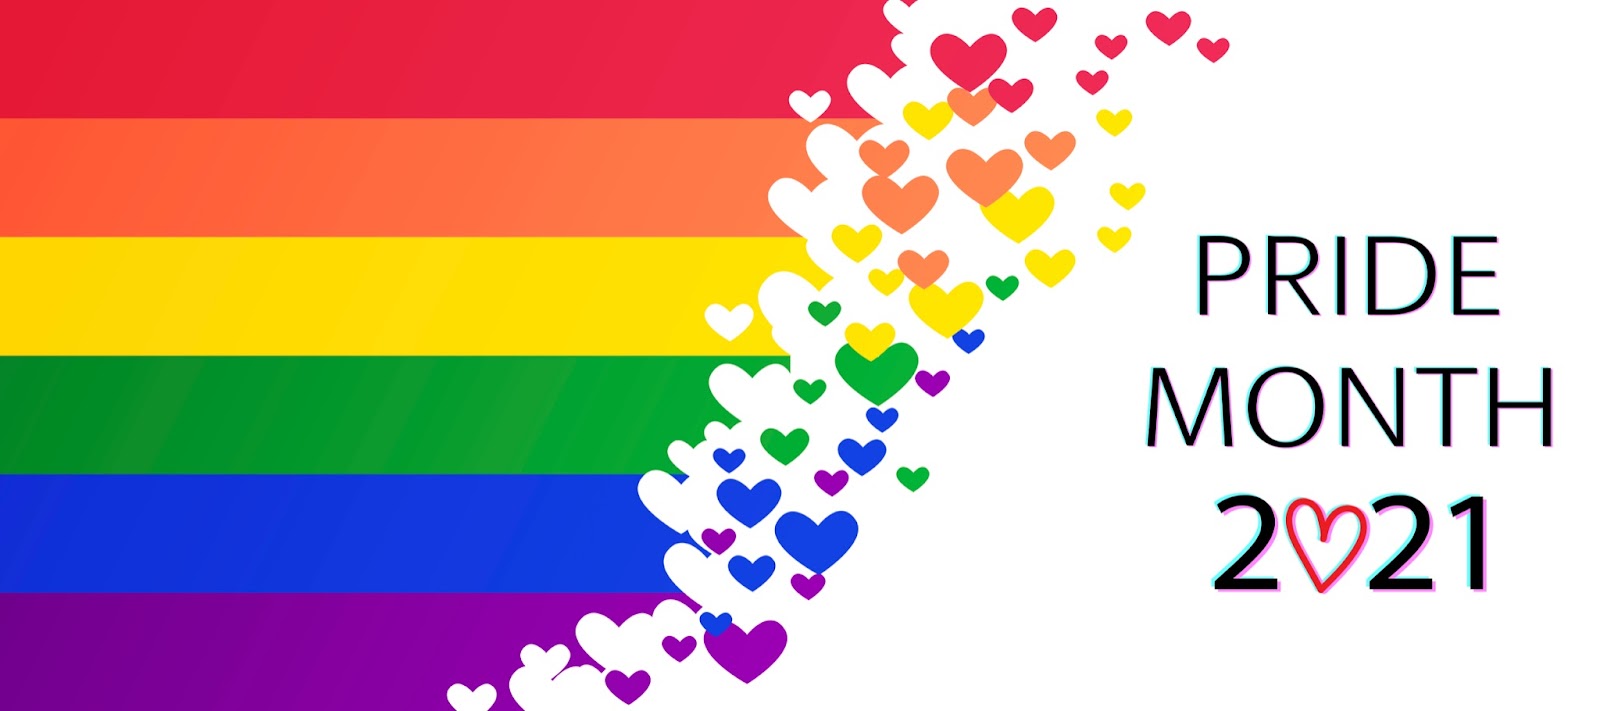 Pride month logo